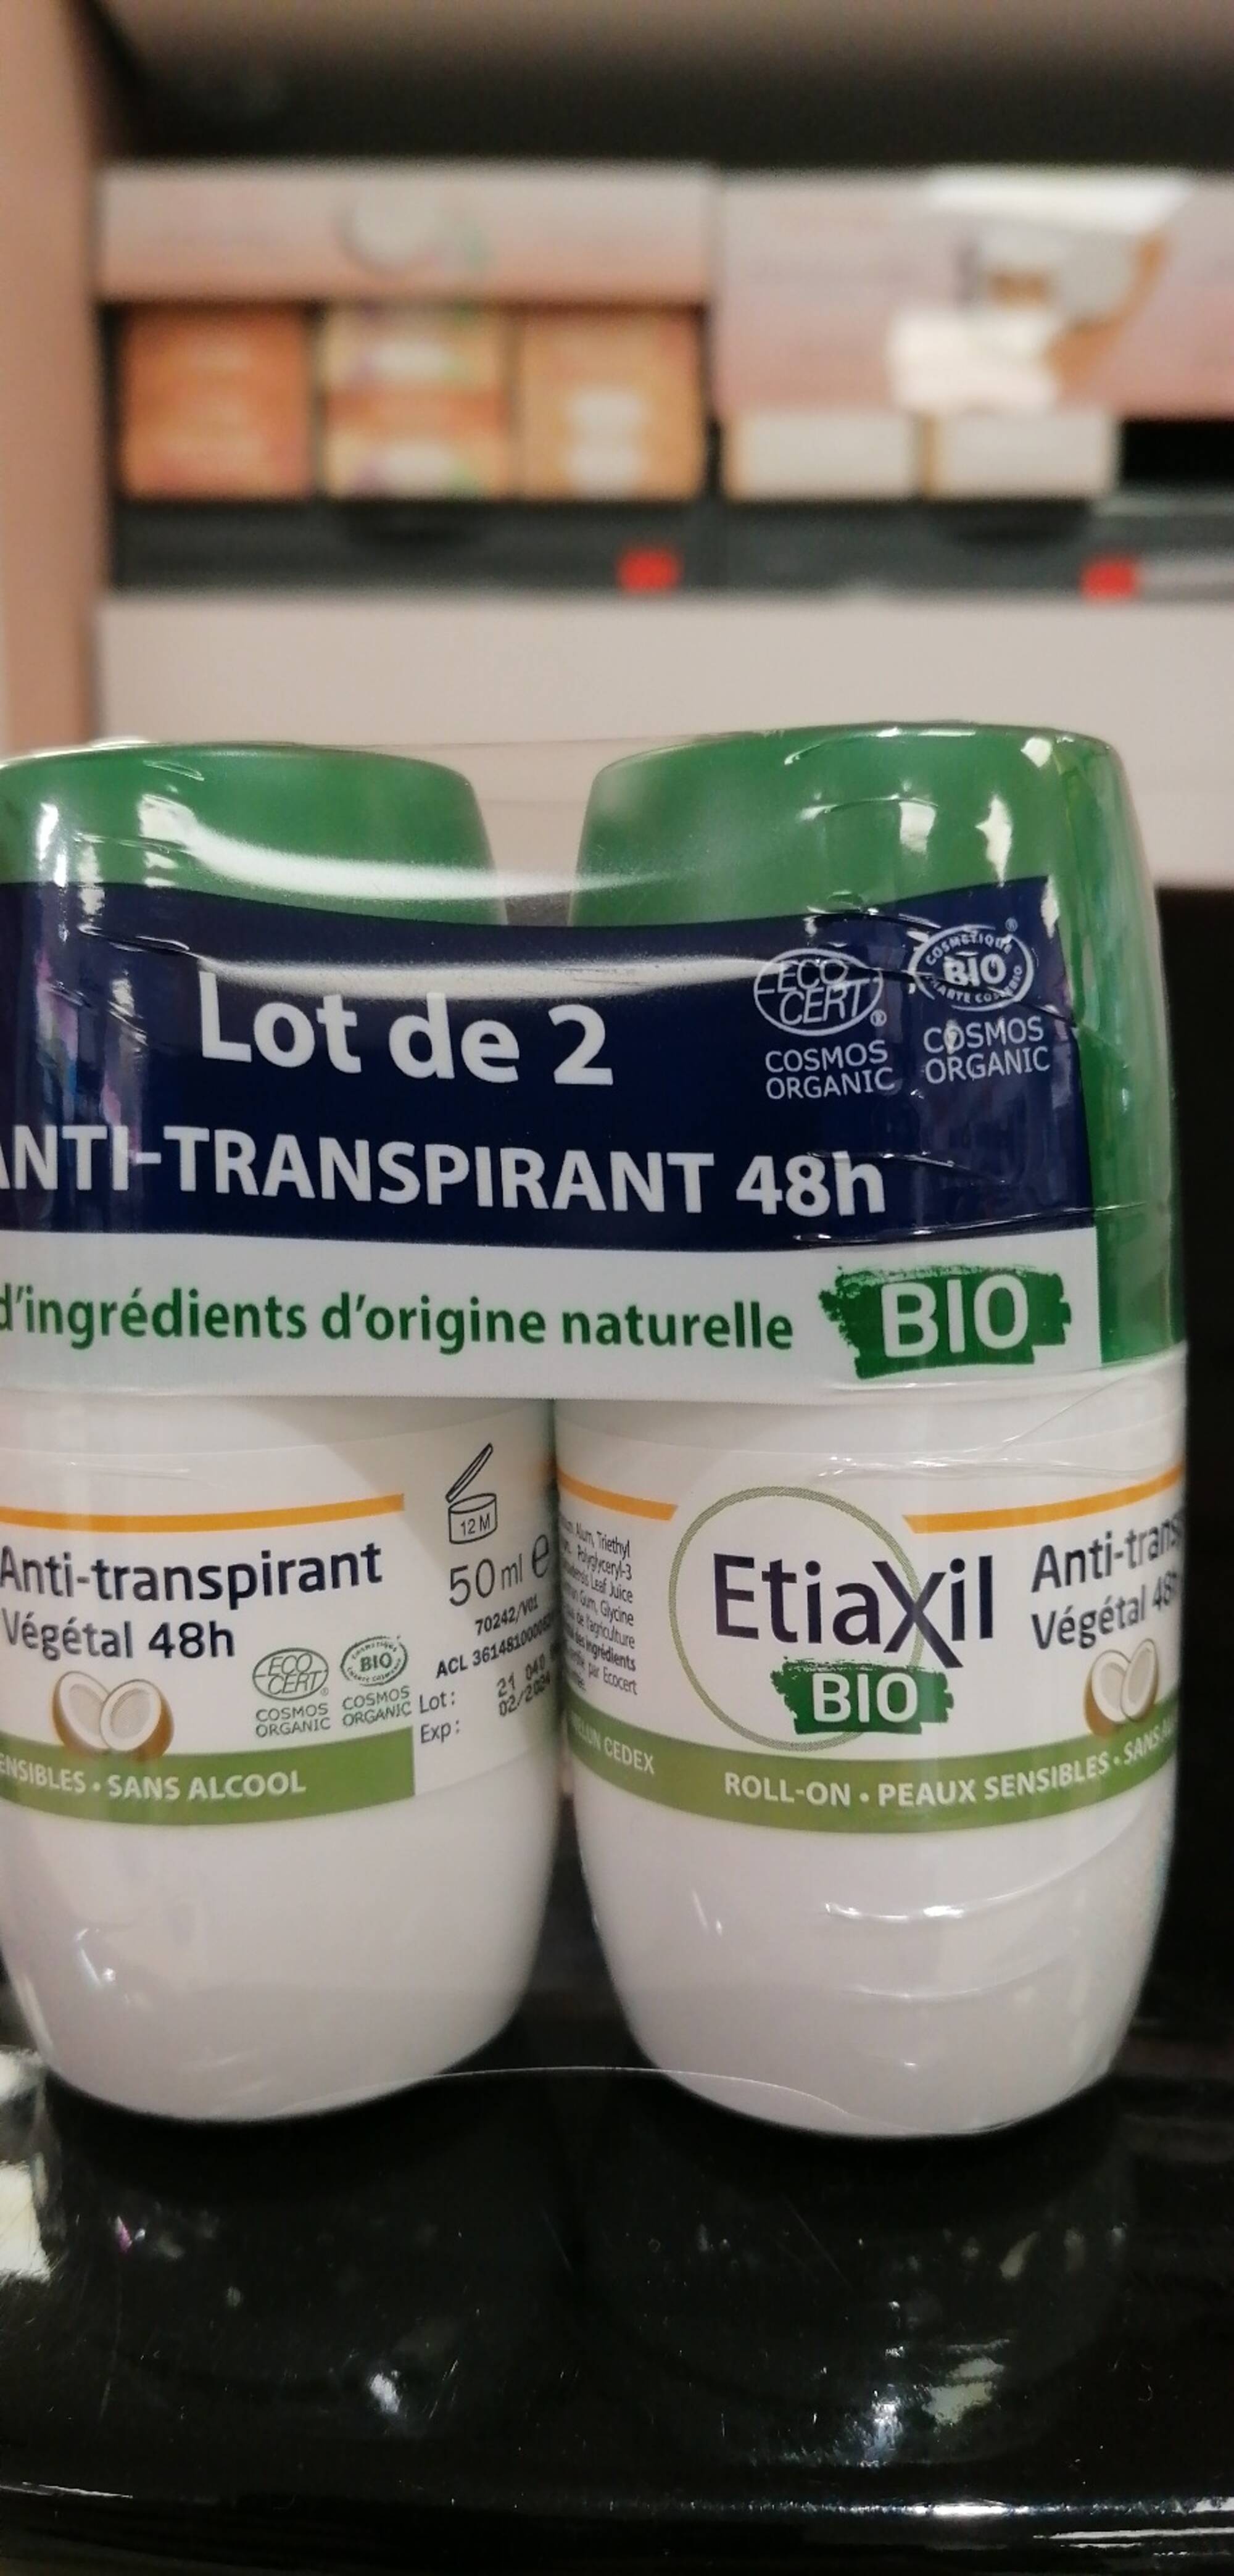 ETIAXIL - Anti-transpirant - Végétal 48 h